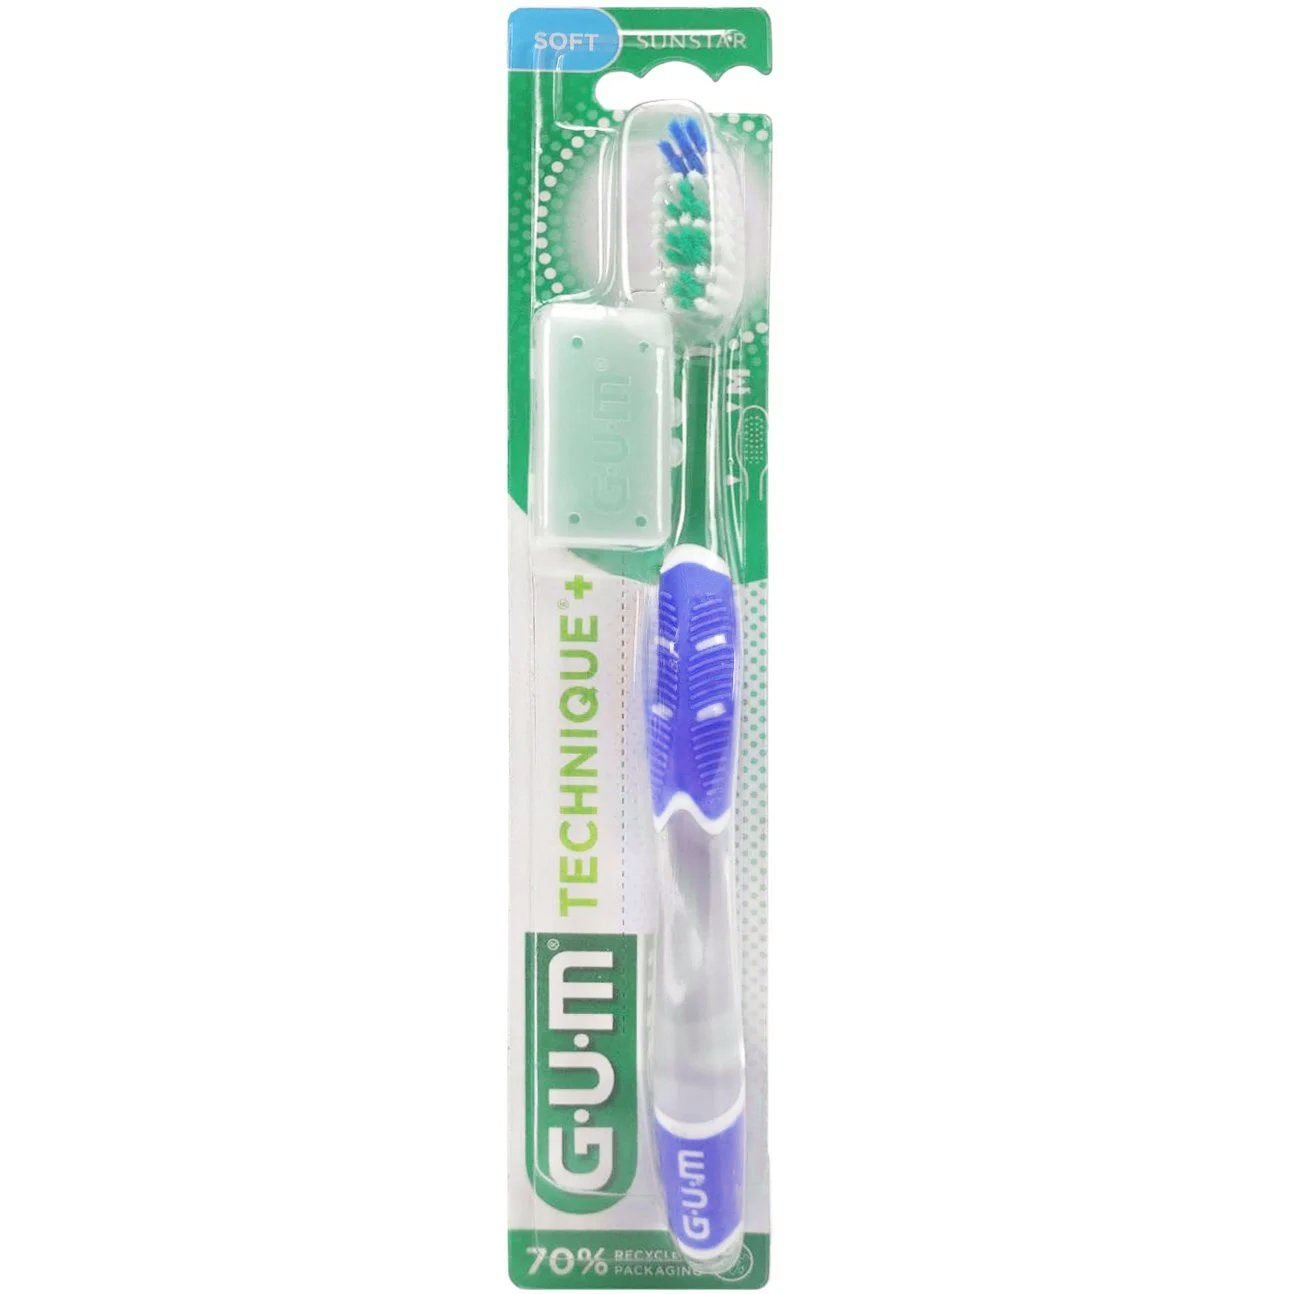 Gum Technique+ Soft Toothbrush Medium Μπλε Χειροκίνητη Οδοντόβουρτσα με Μαλακές Ίνες 1 Τεμάχιο, Κωδ 490